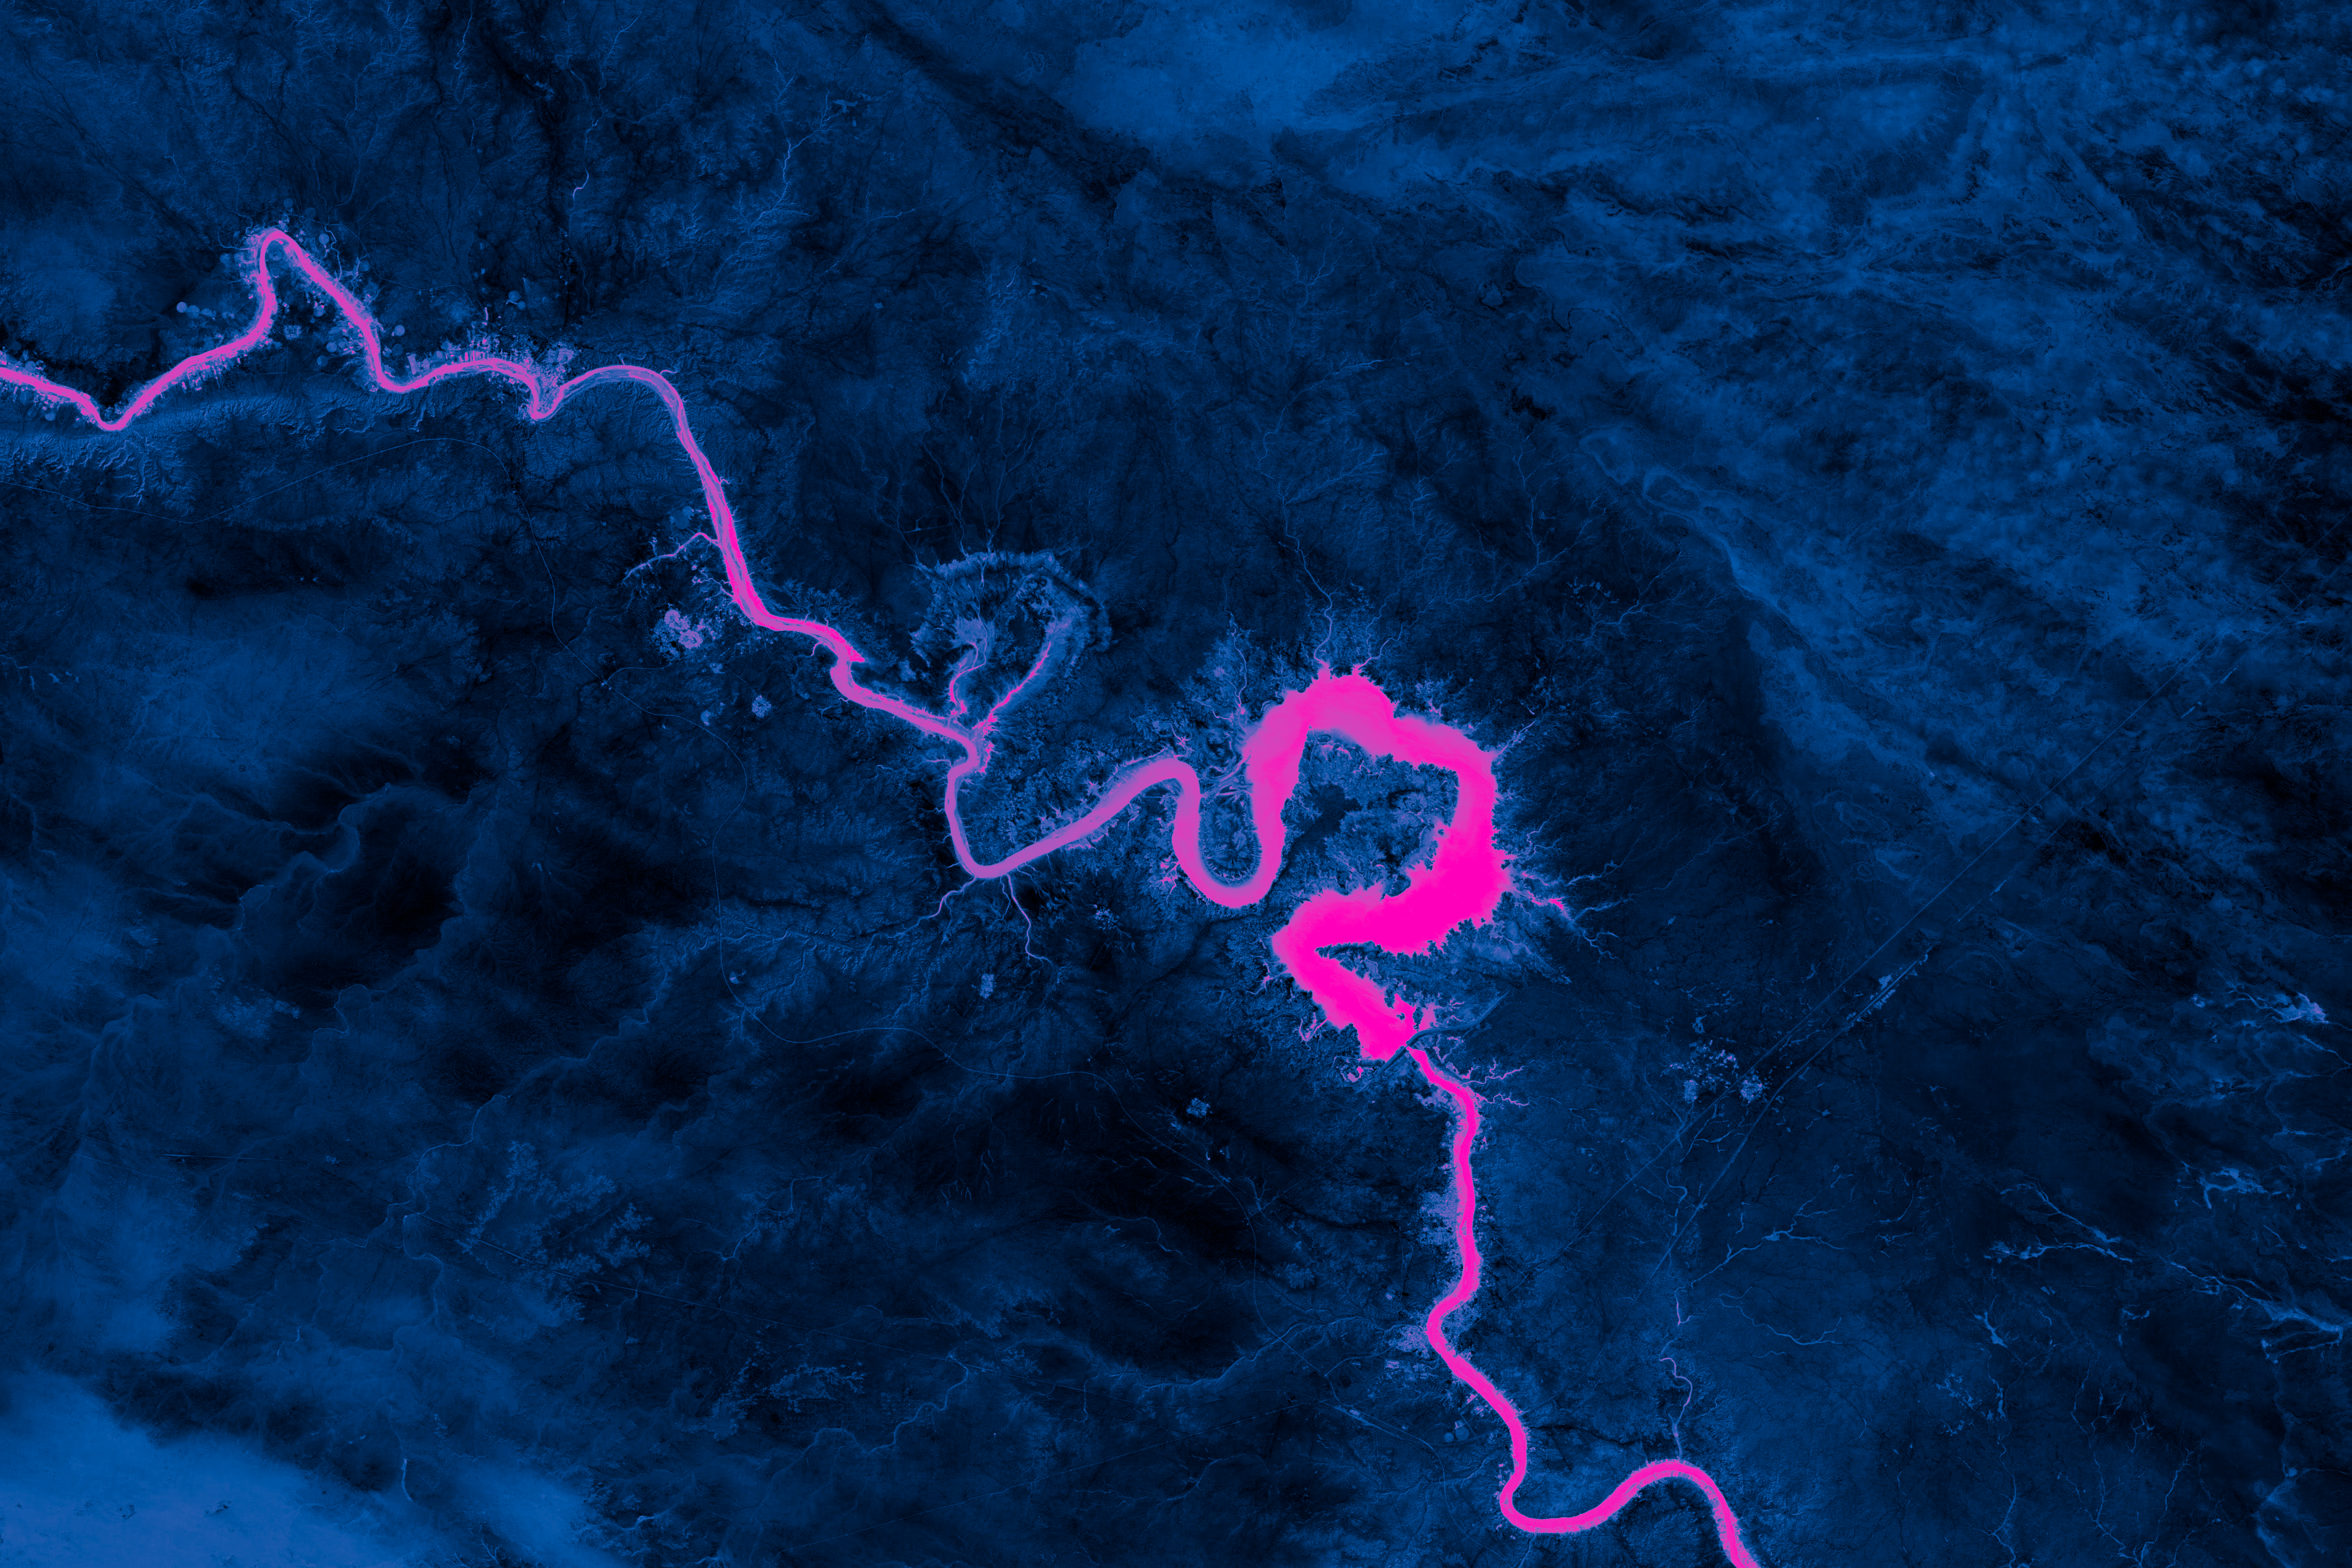 Neon Nature Synthwave Dark River Satellite Aerial View 3606x2404